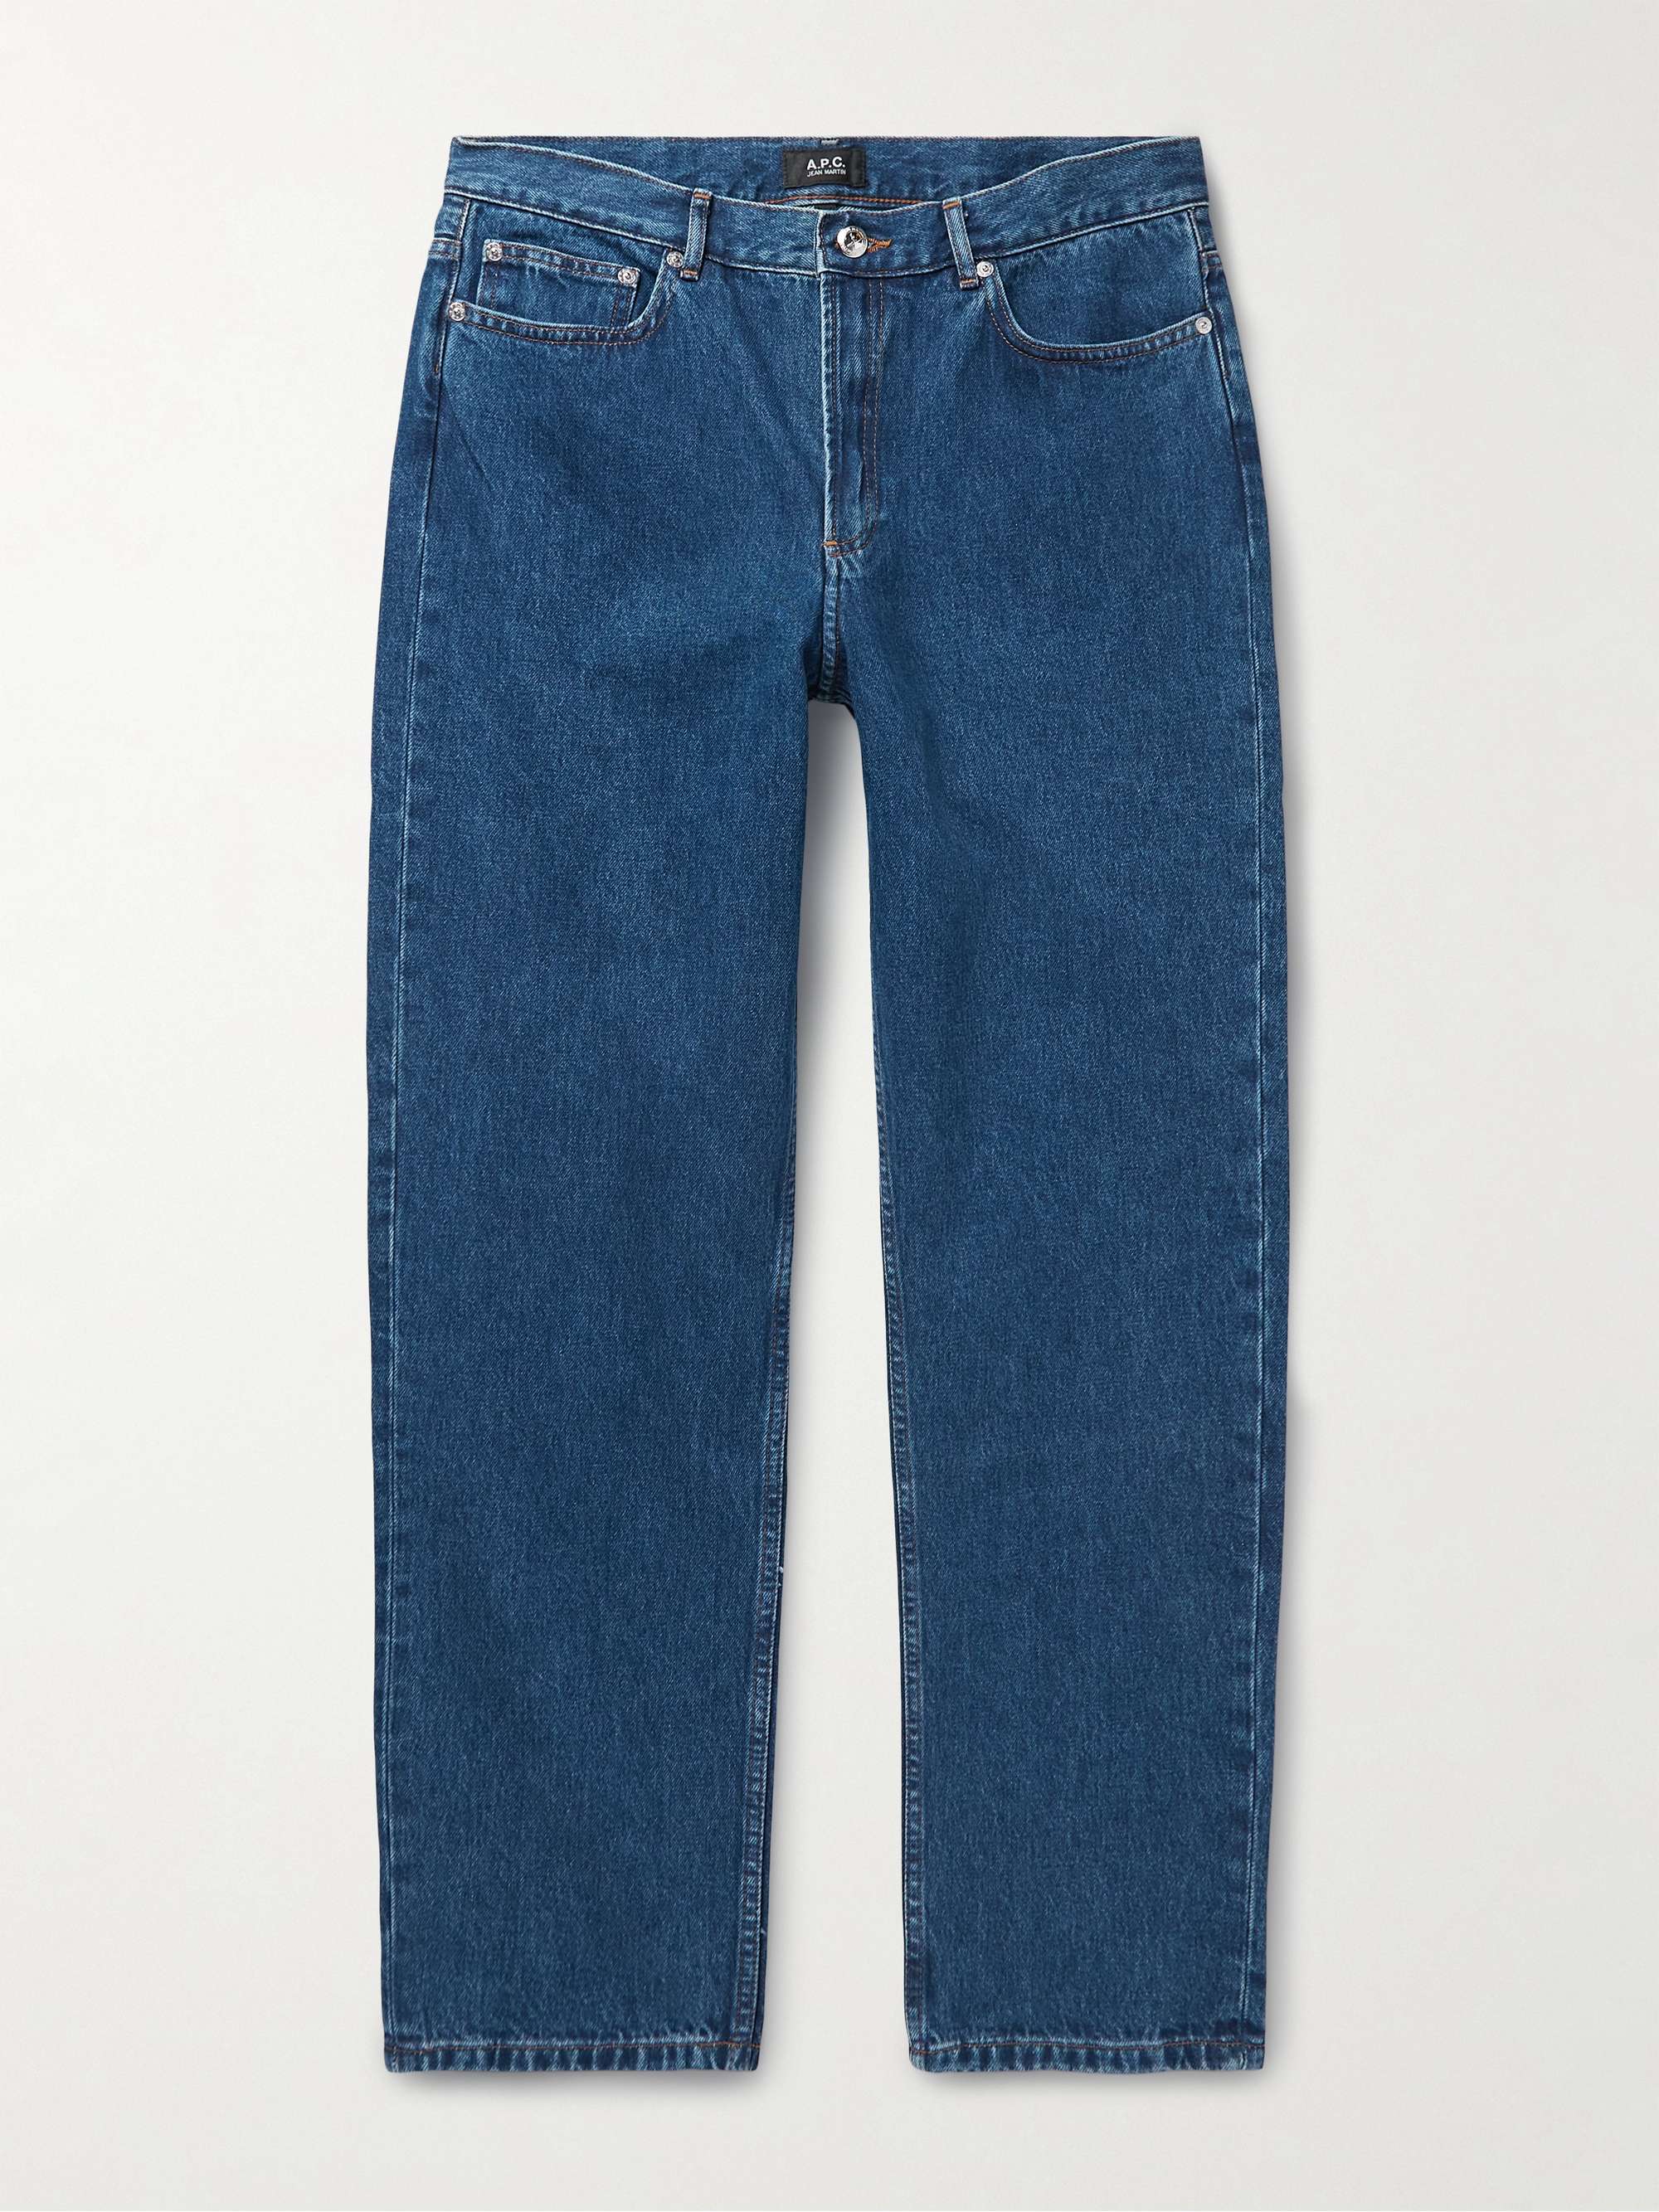 Blue Martin Straight-Leg Stonewashed Jeans | A.P.C. | MR PORTER